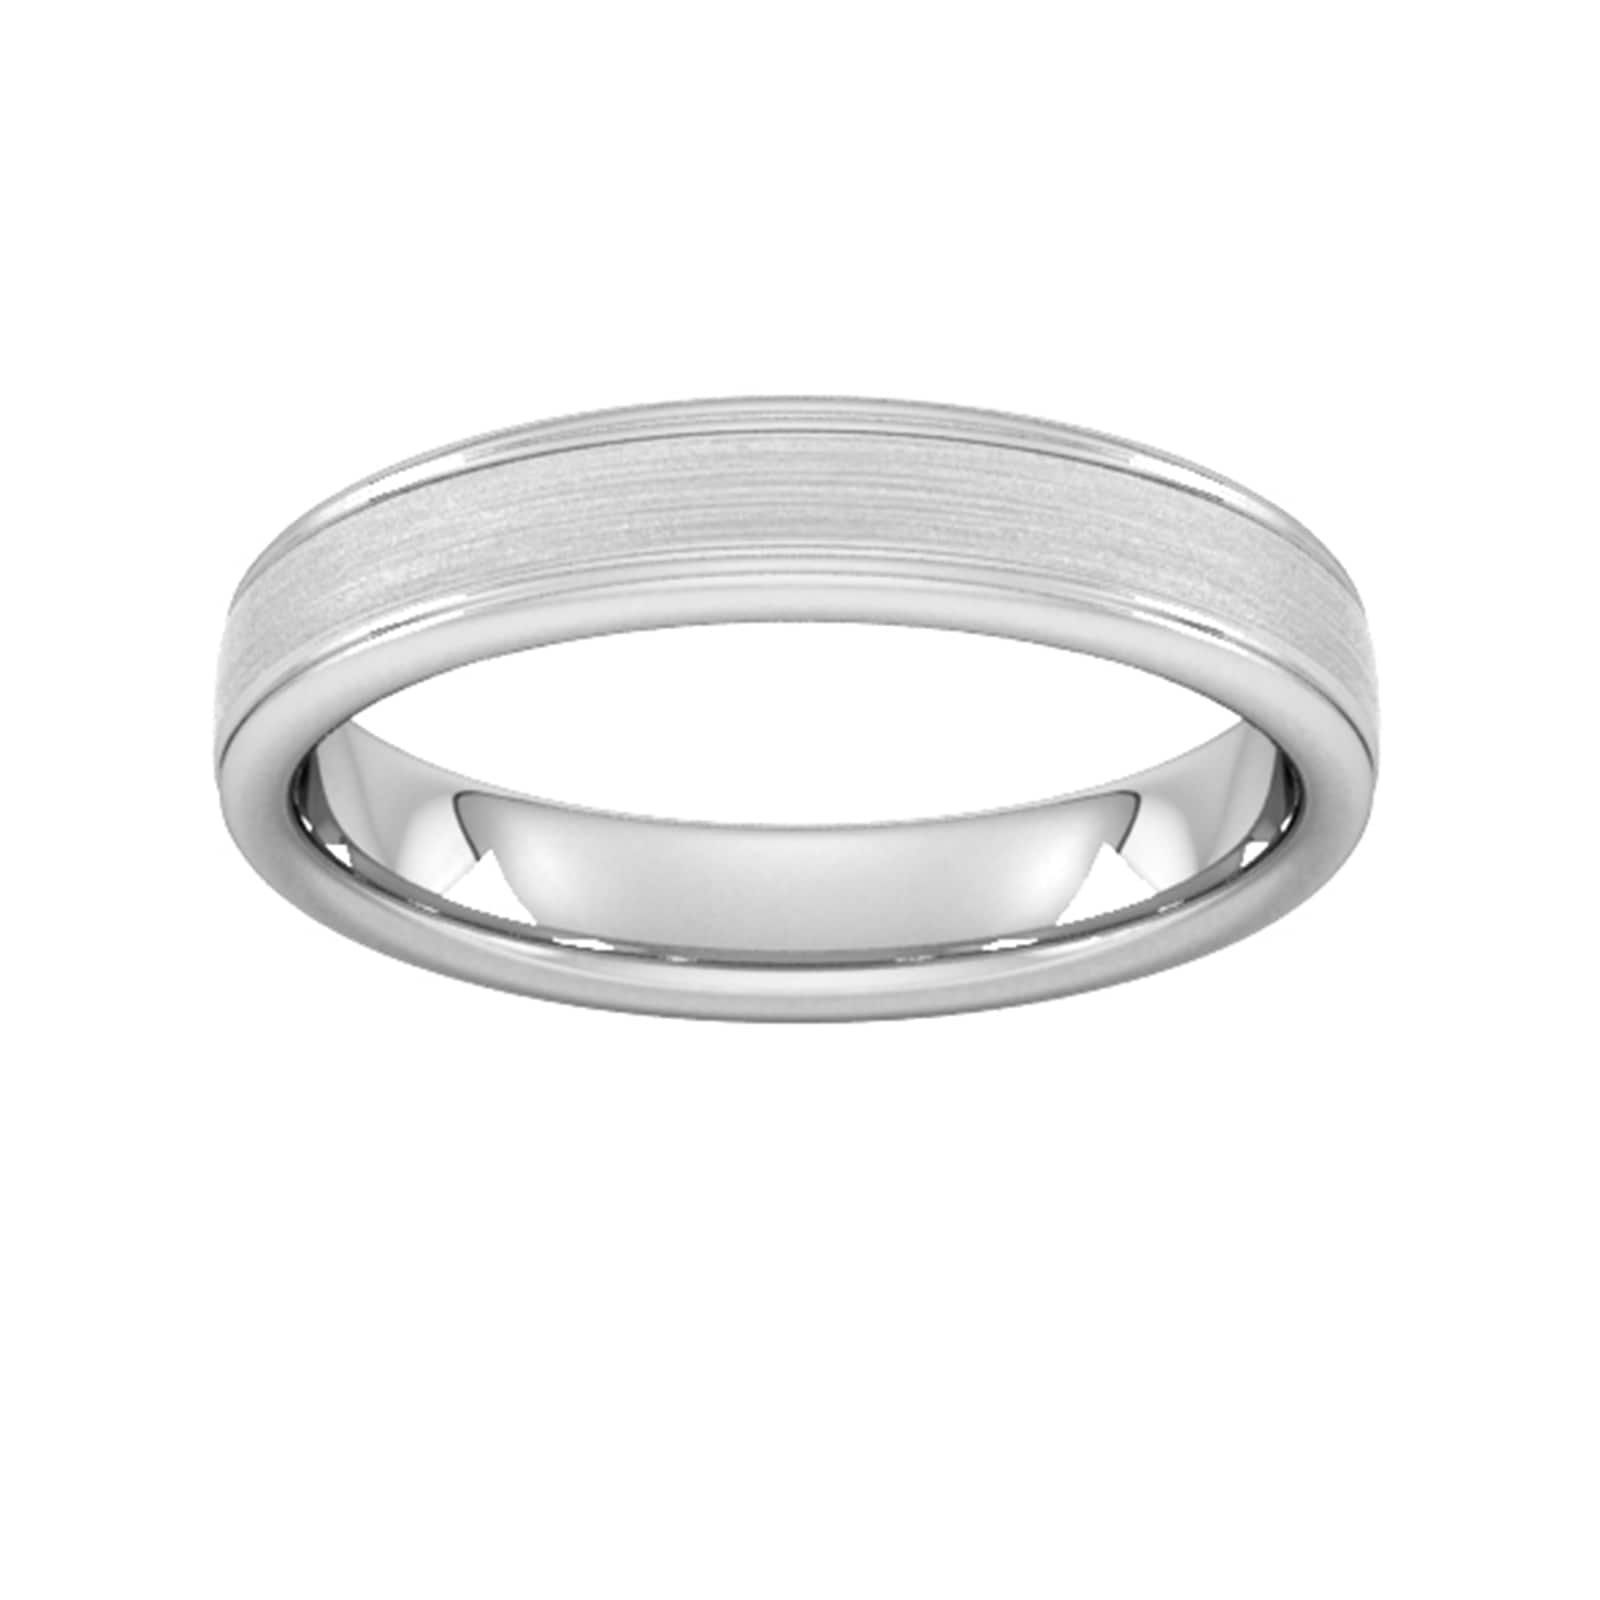 4mm D Shape Heavy Matt Centre With Grooves Wedding Ring In 950 Palladium - Ring Size G